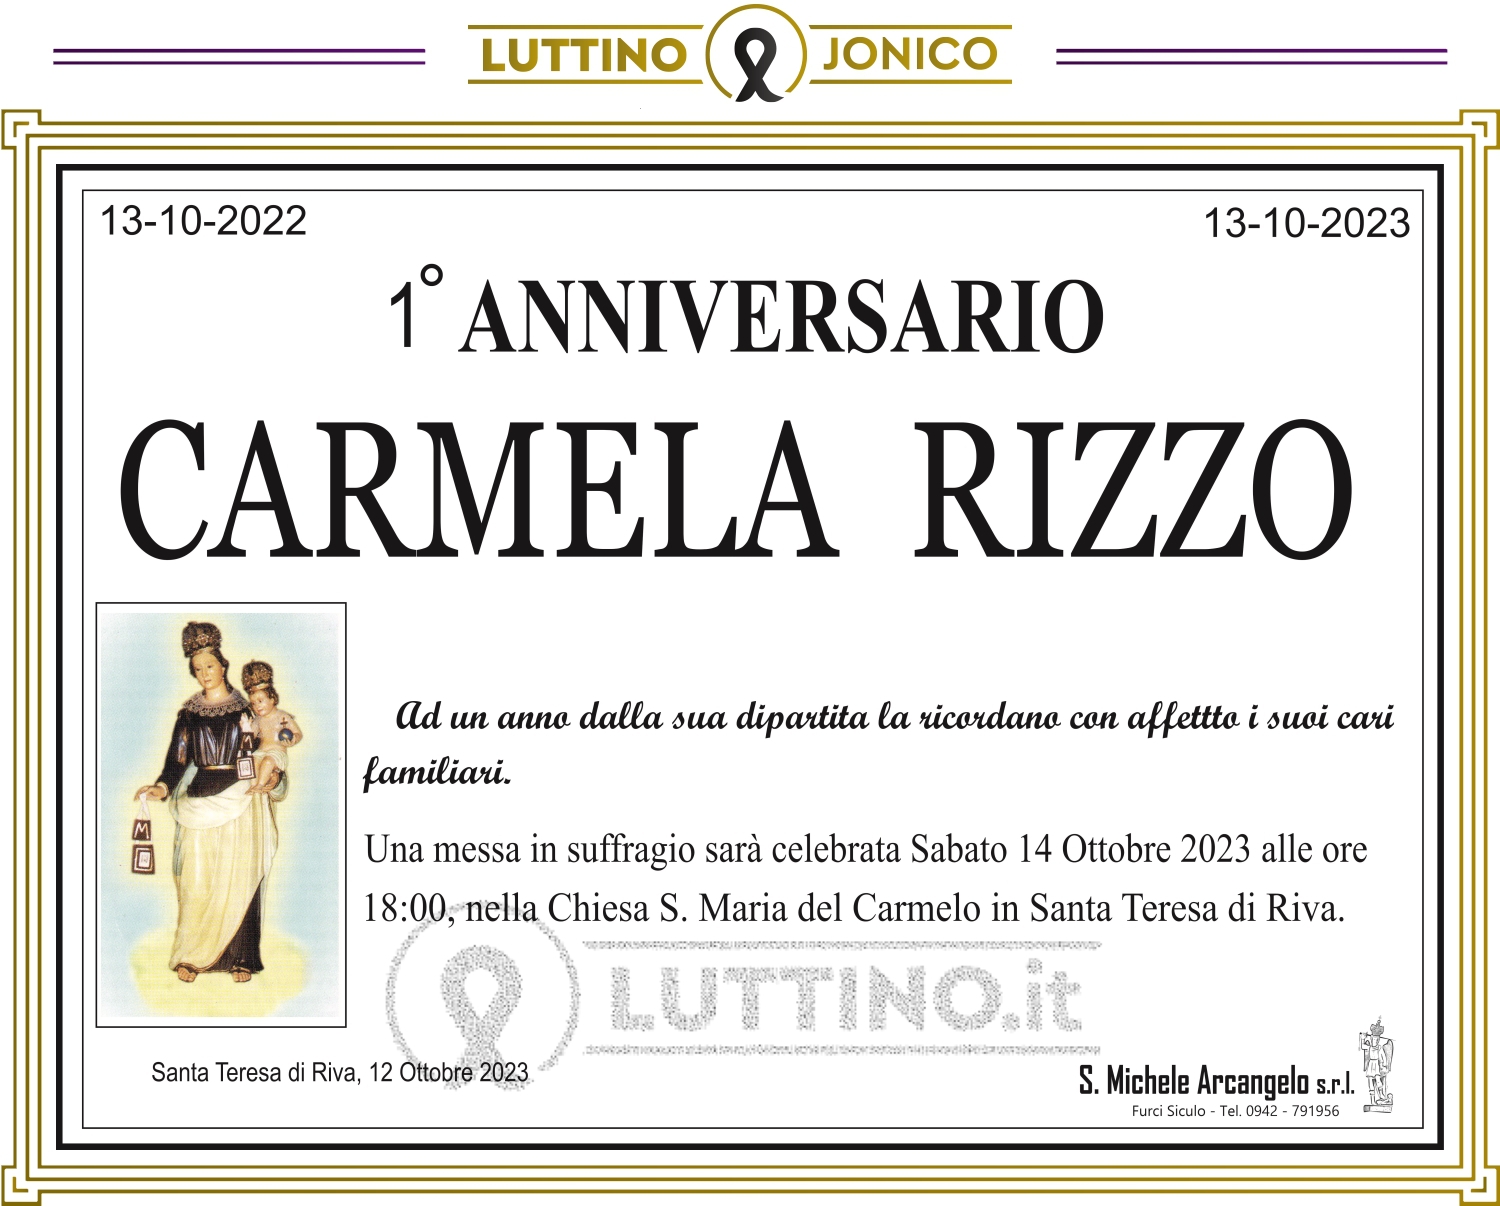 Carmela Rizzo